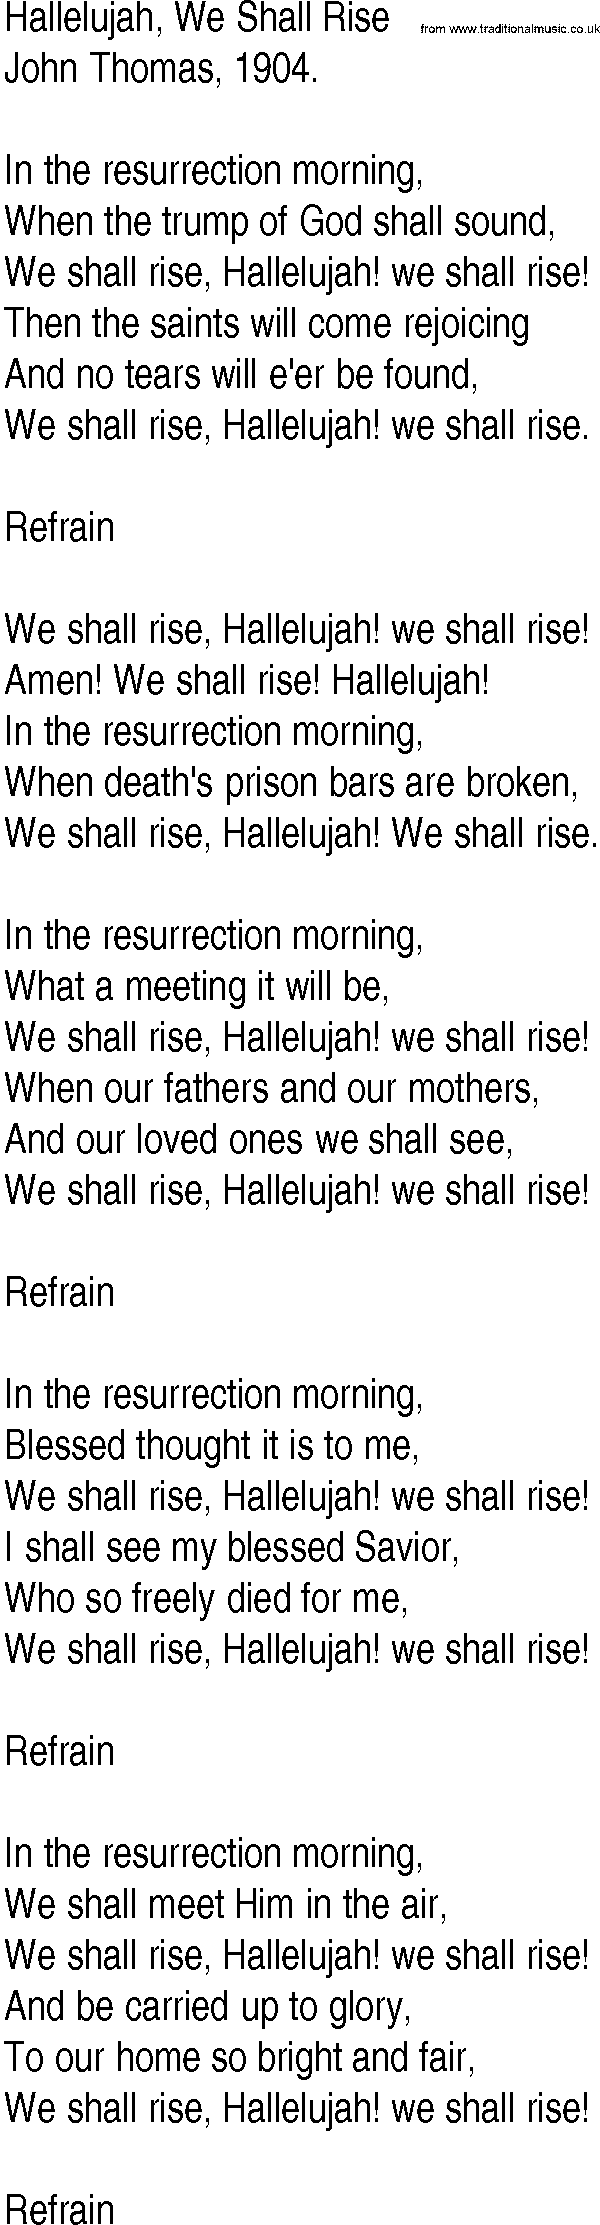 Hymn and Gospel Song: Hallelujah, We Shall Rise by John Thomas lyrics